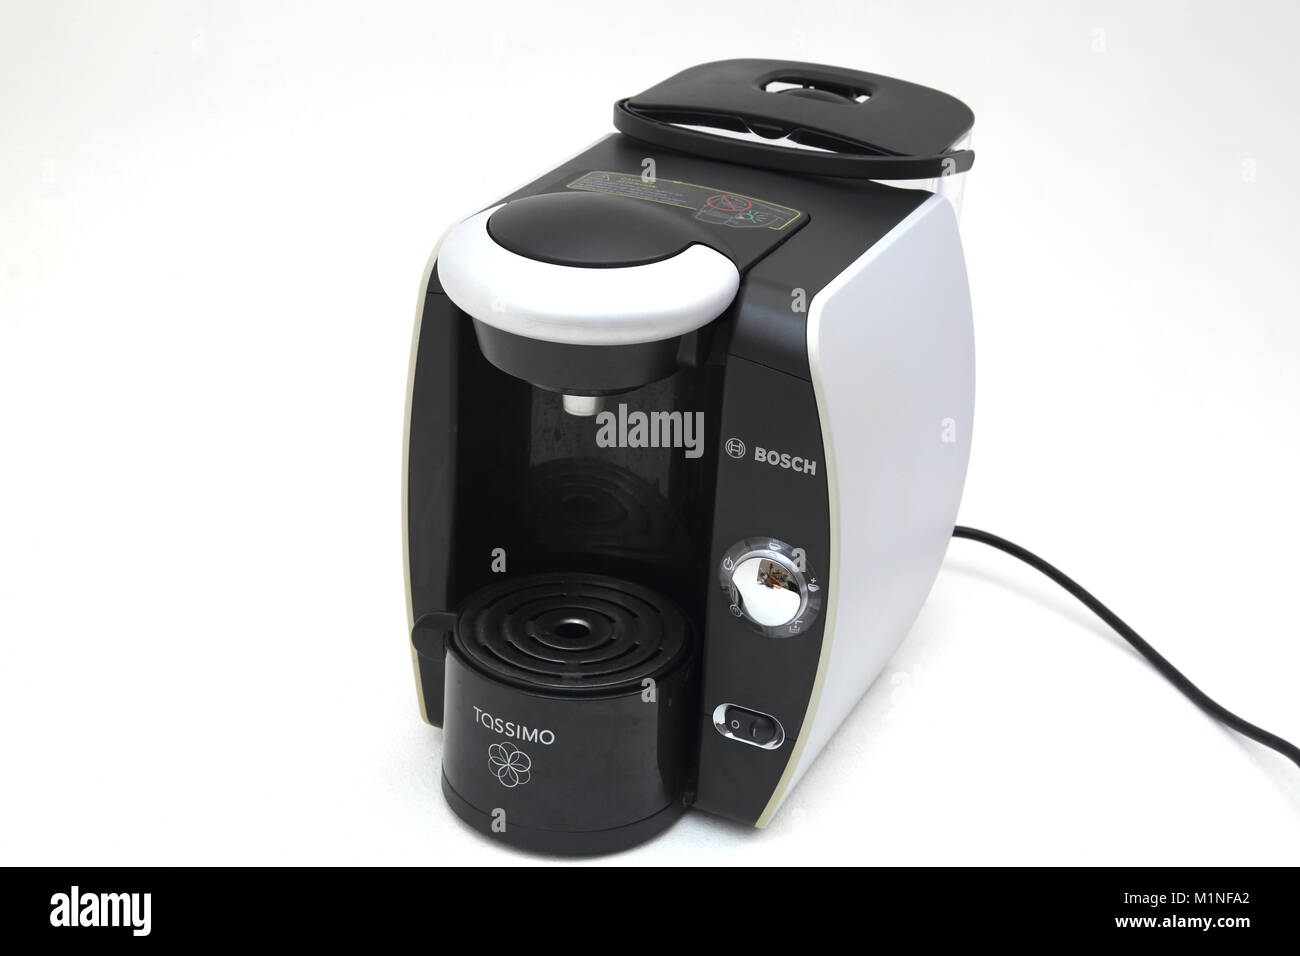 Bosch Tassimo Coffee Machine Stock Photo - Alamy